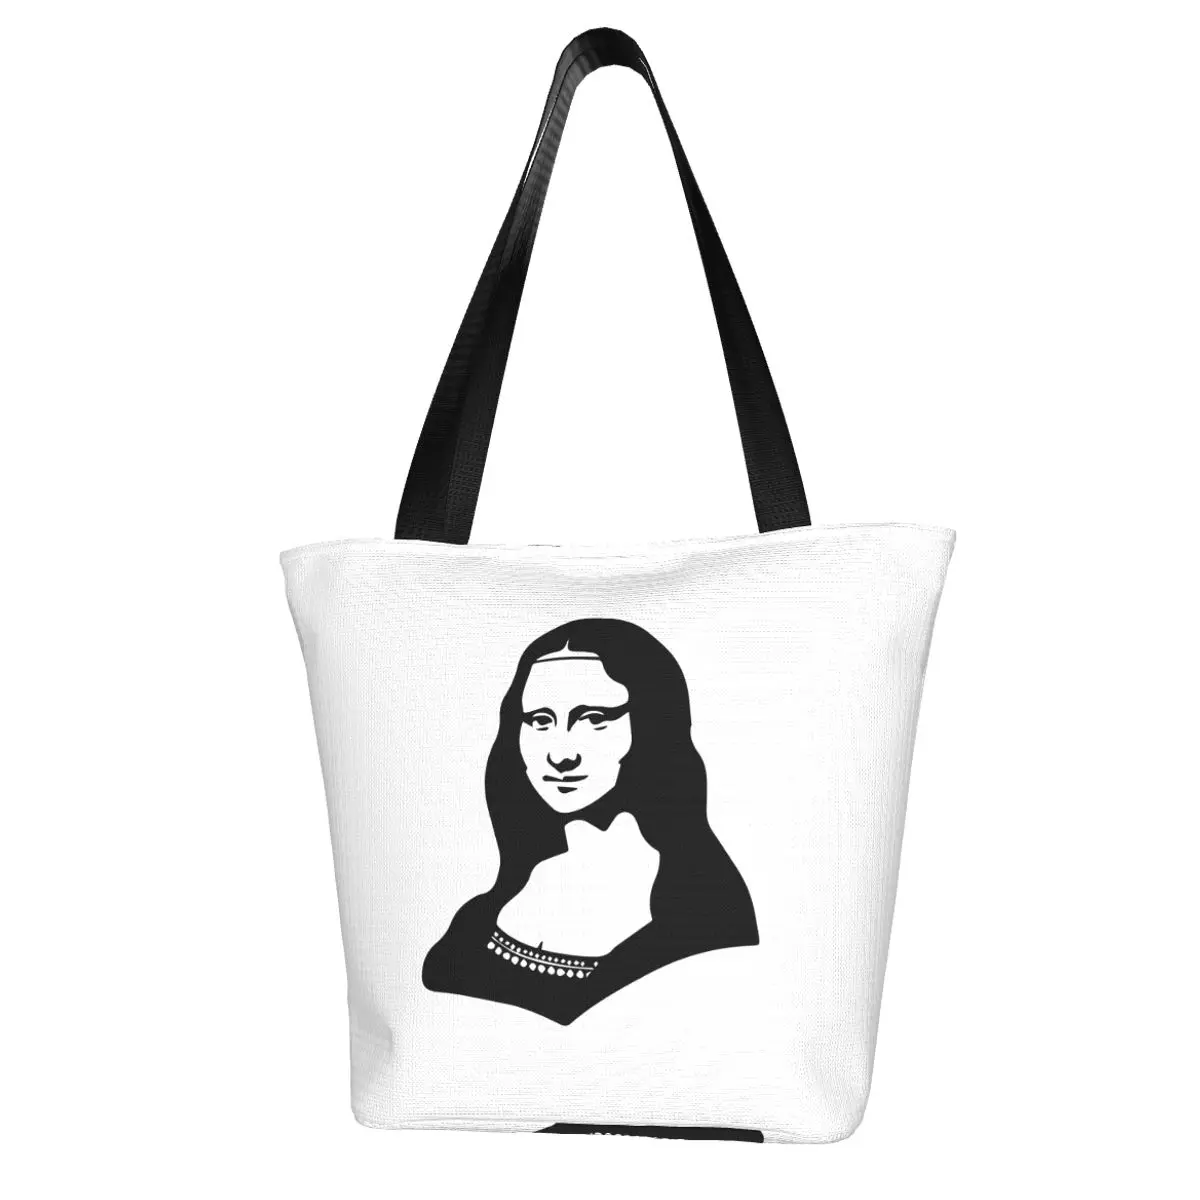 Mona Lisa Shopping Bag Aesthetic Cloth Outdoor Handbag Female Fashion Bags